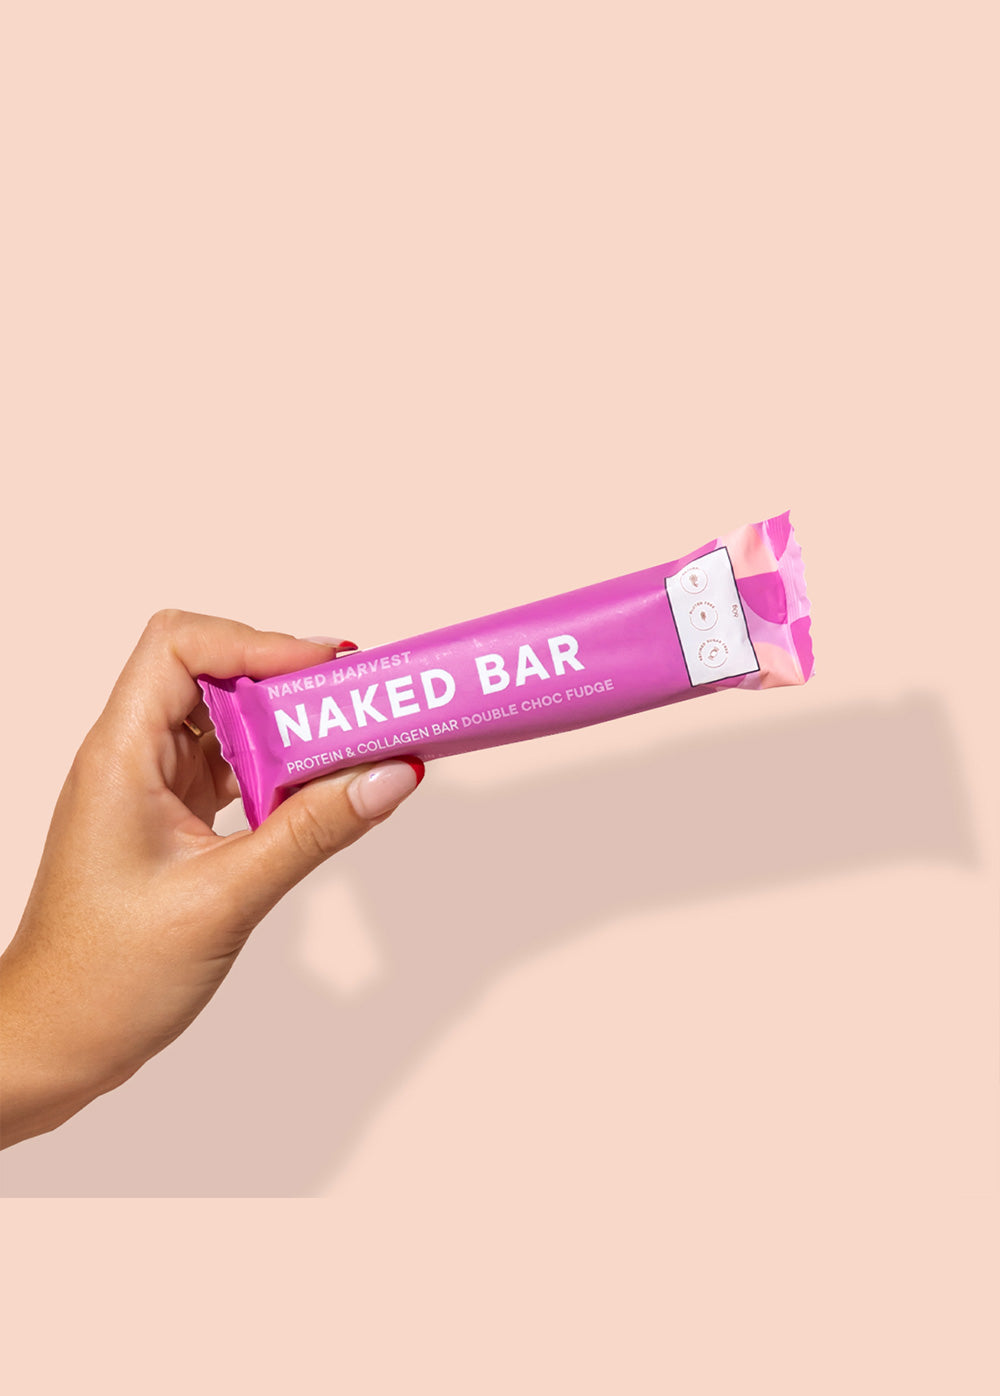 Naked Bars Double Choc Fudge - 2 Pack